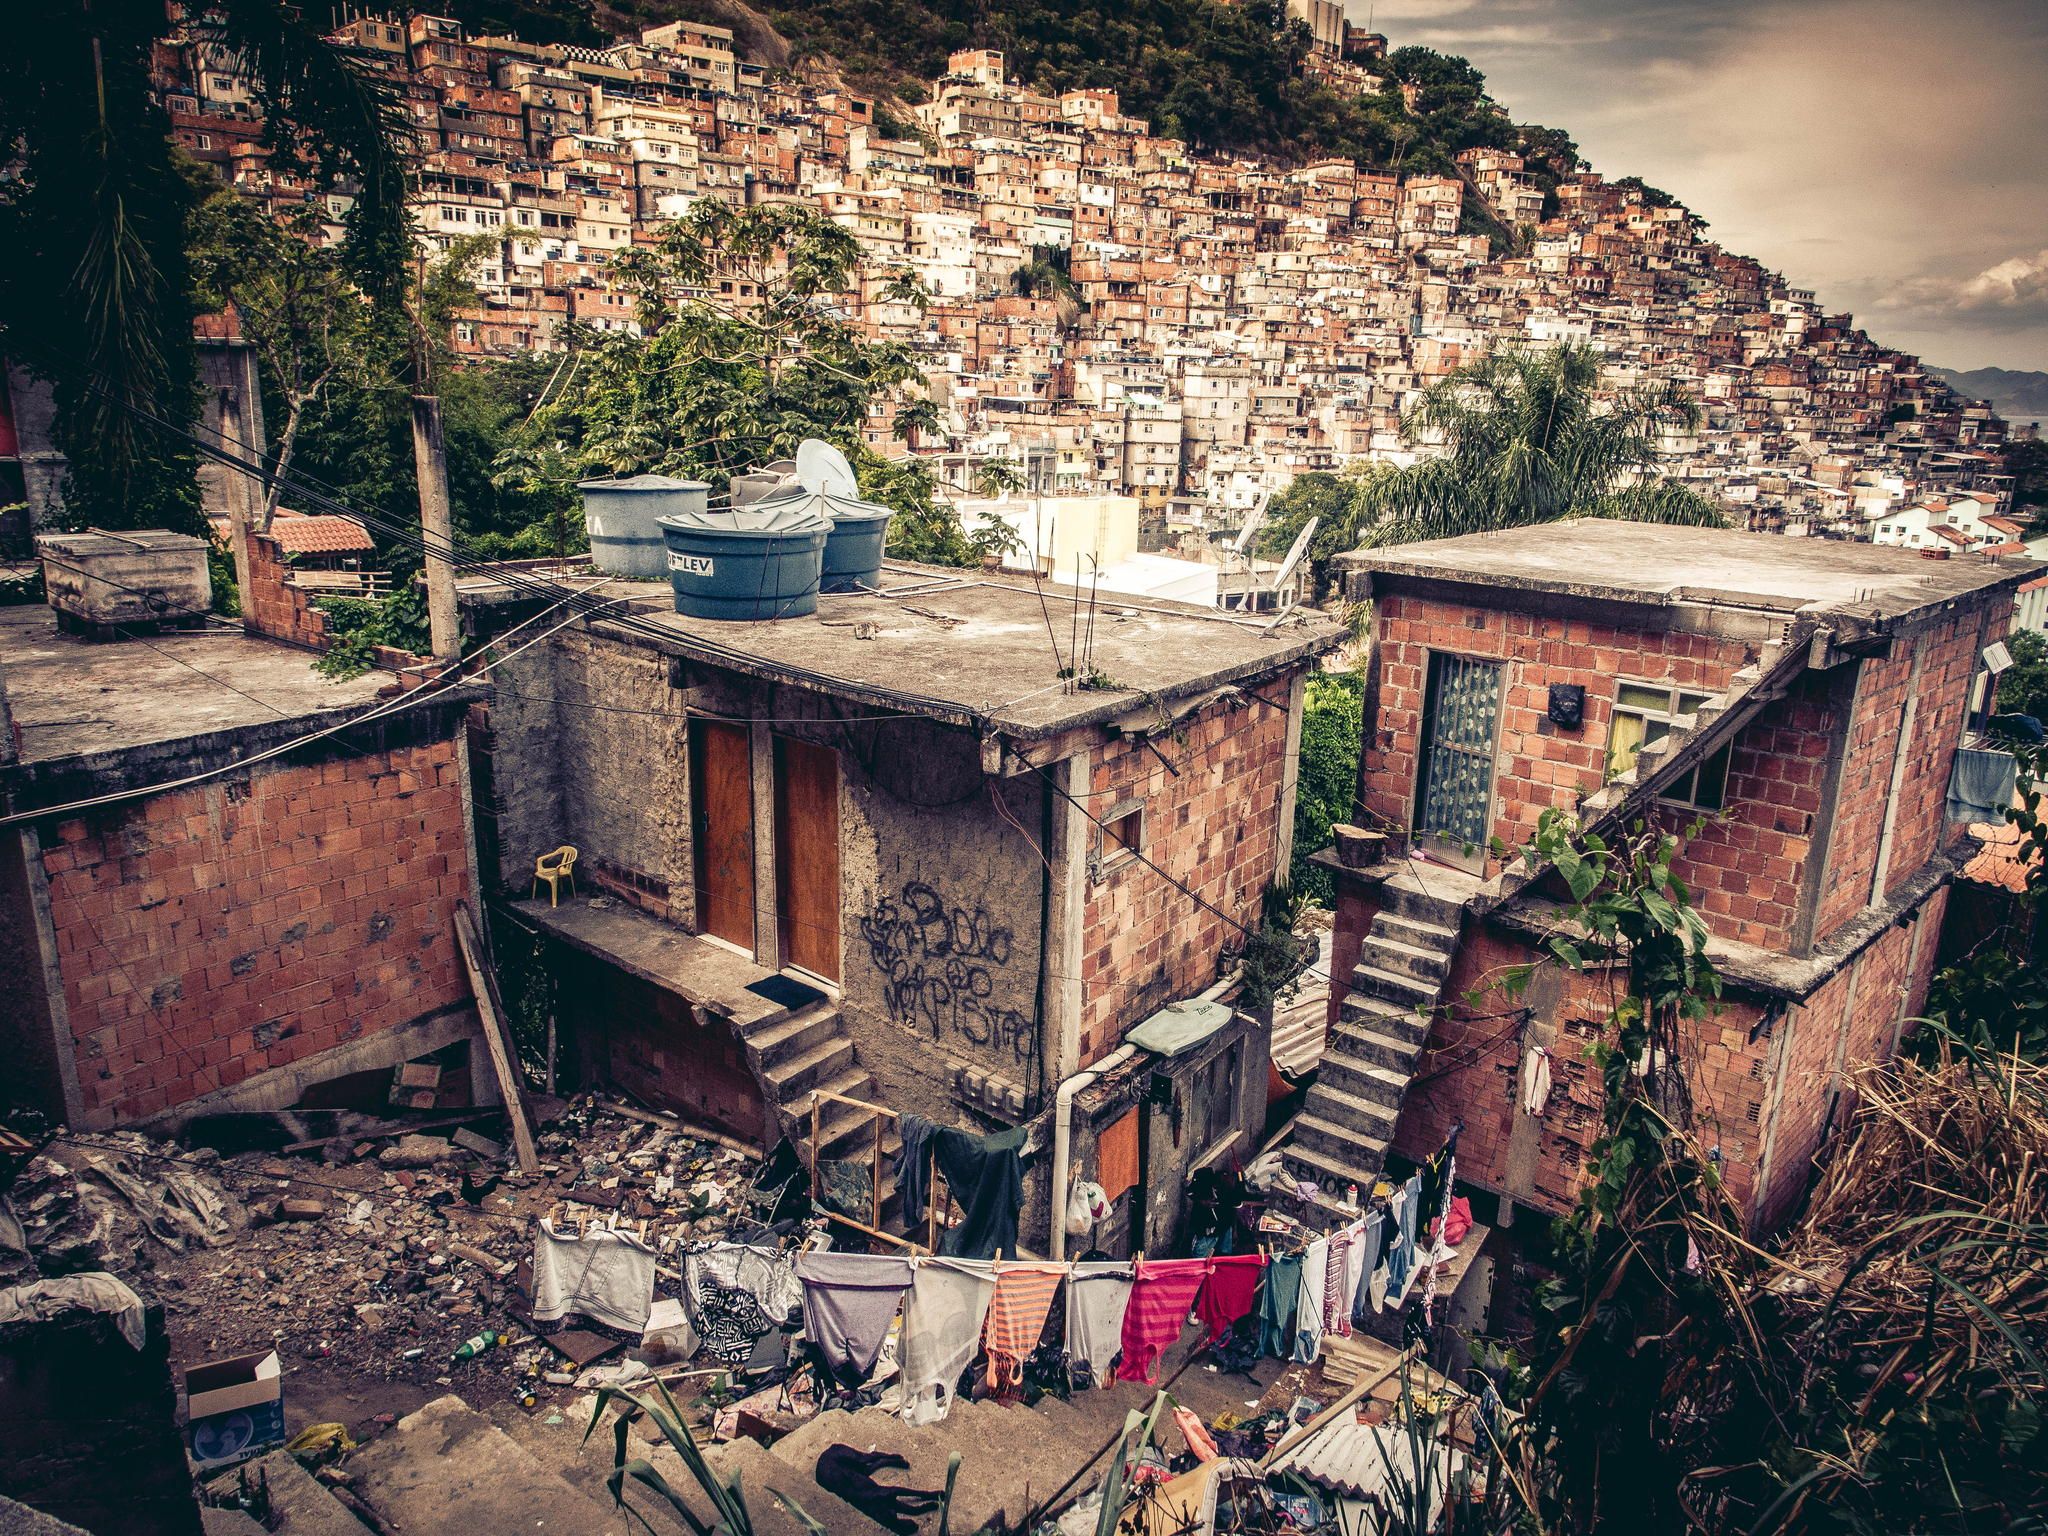 Favela Life - Brazil | Slums, Brazil, Rio carnival